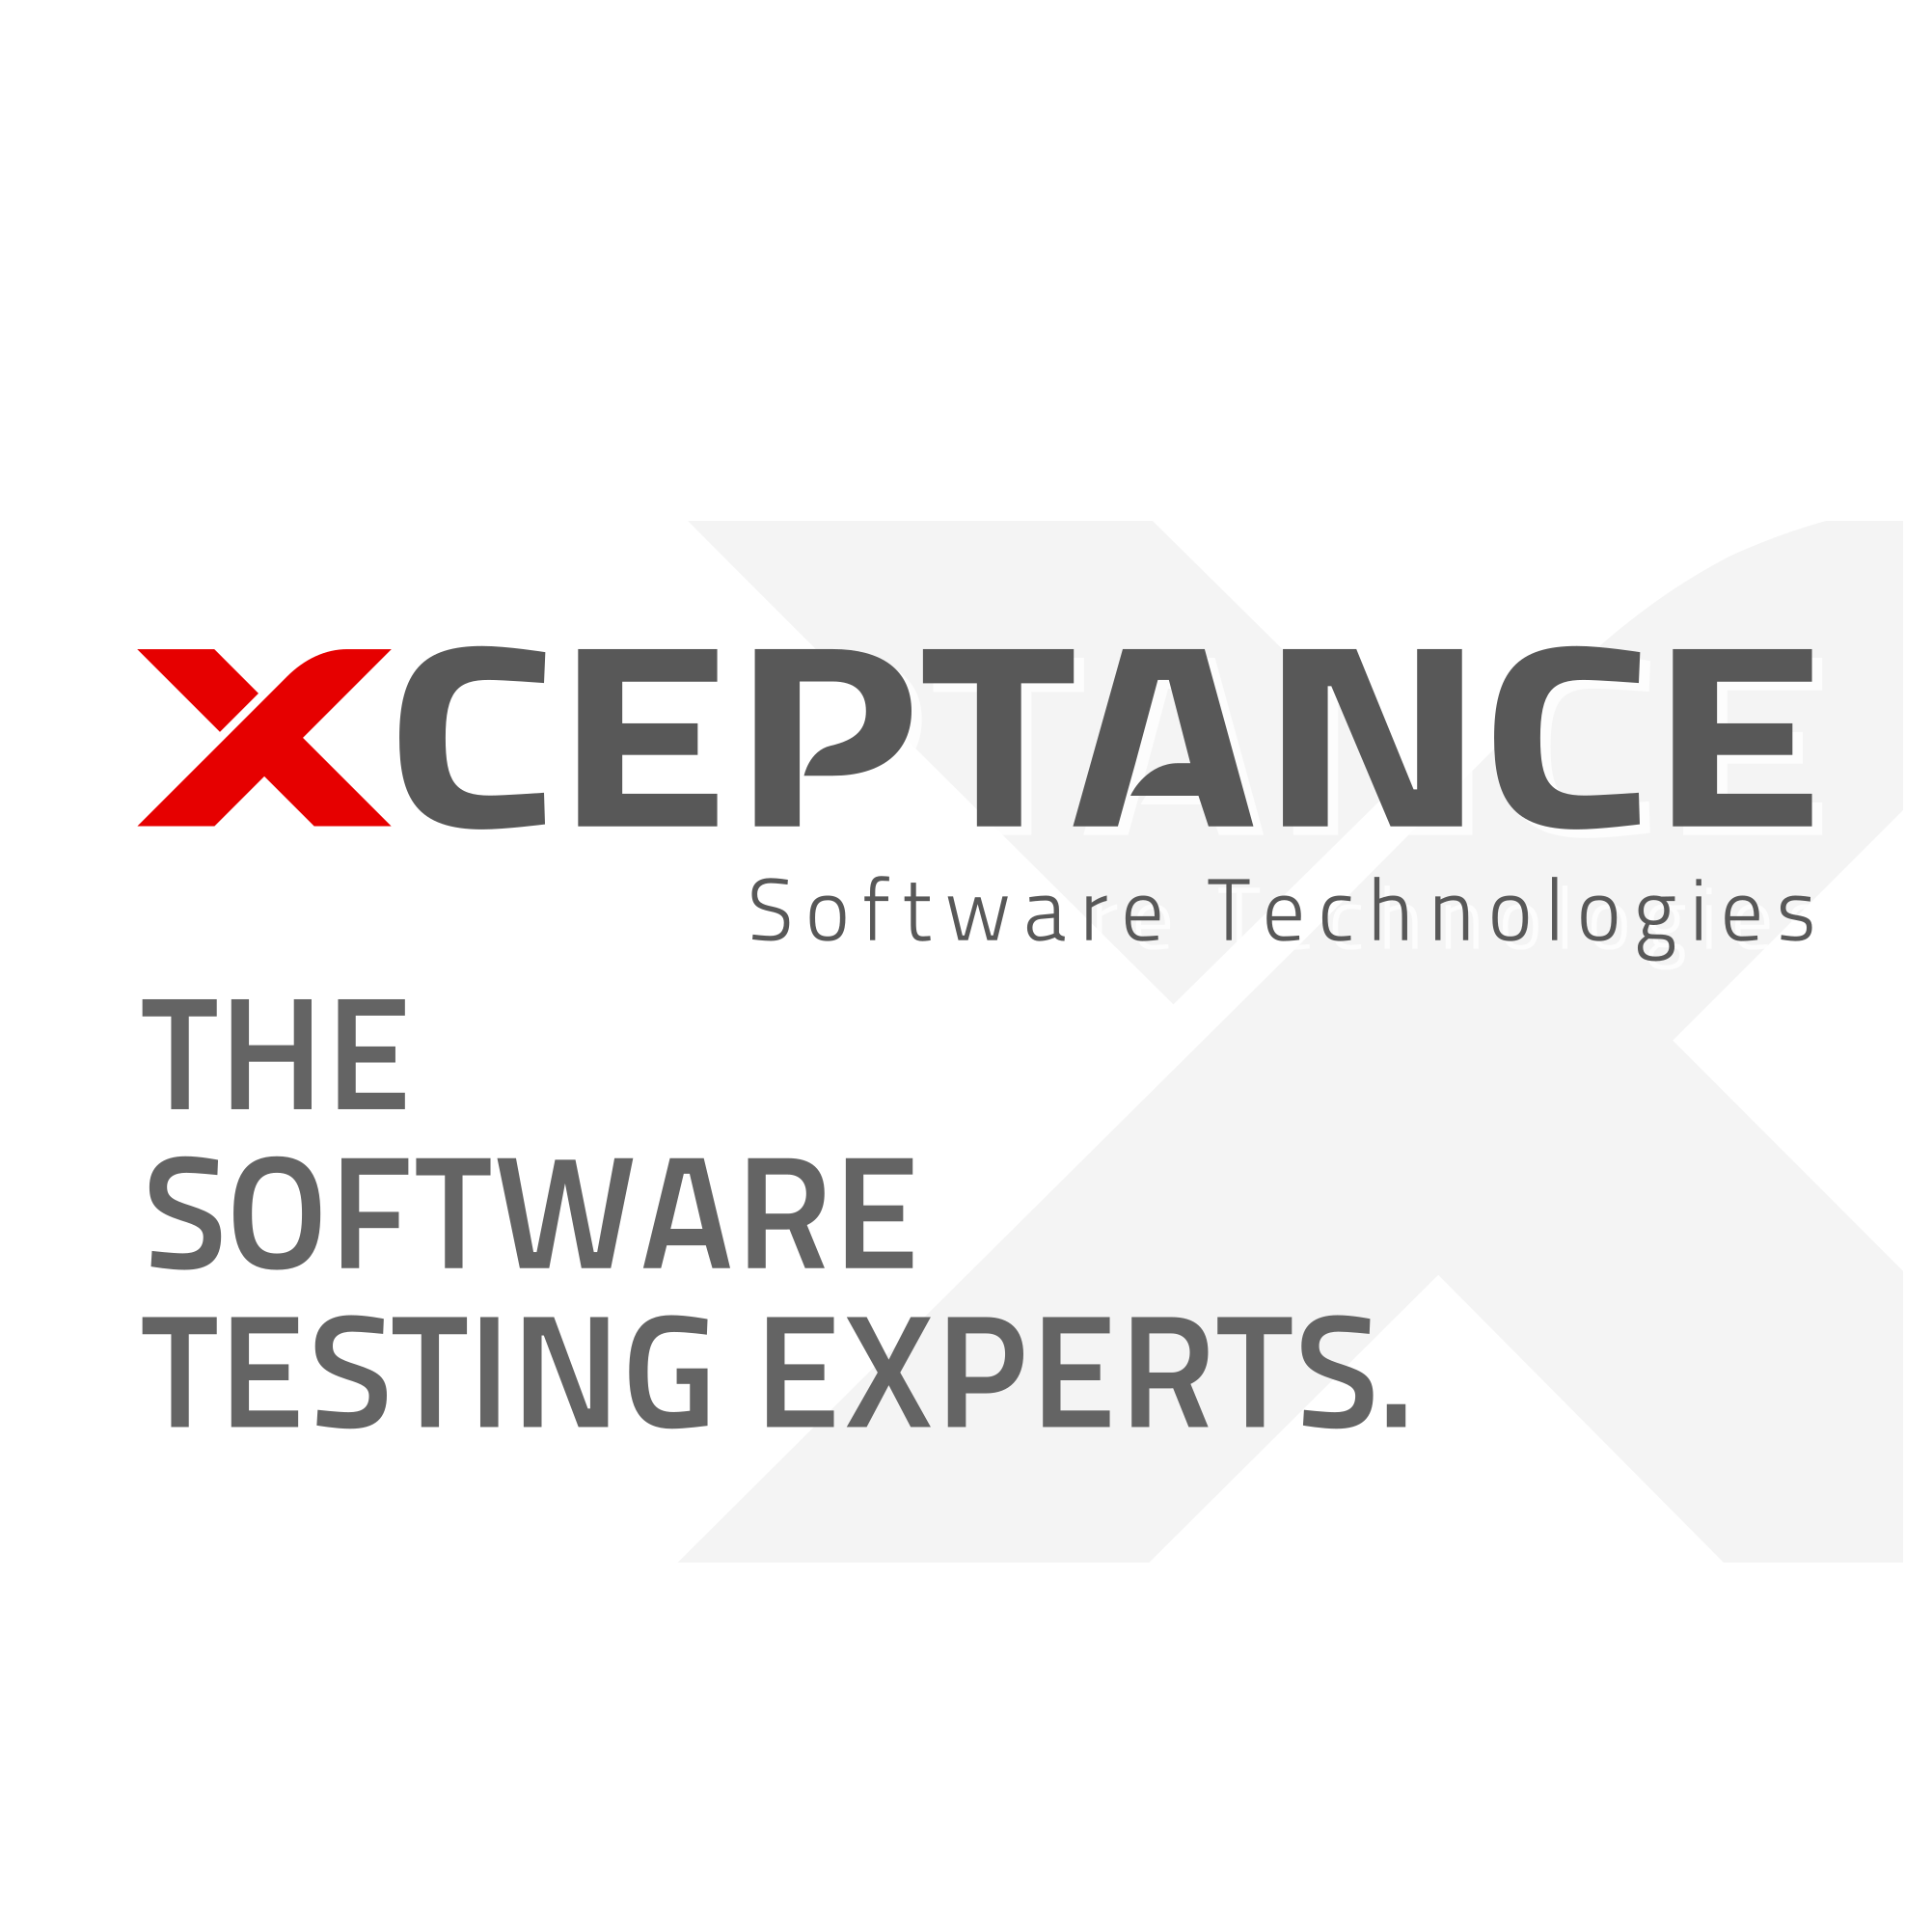 Xceptance Software Technologies GmbH